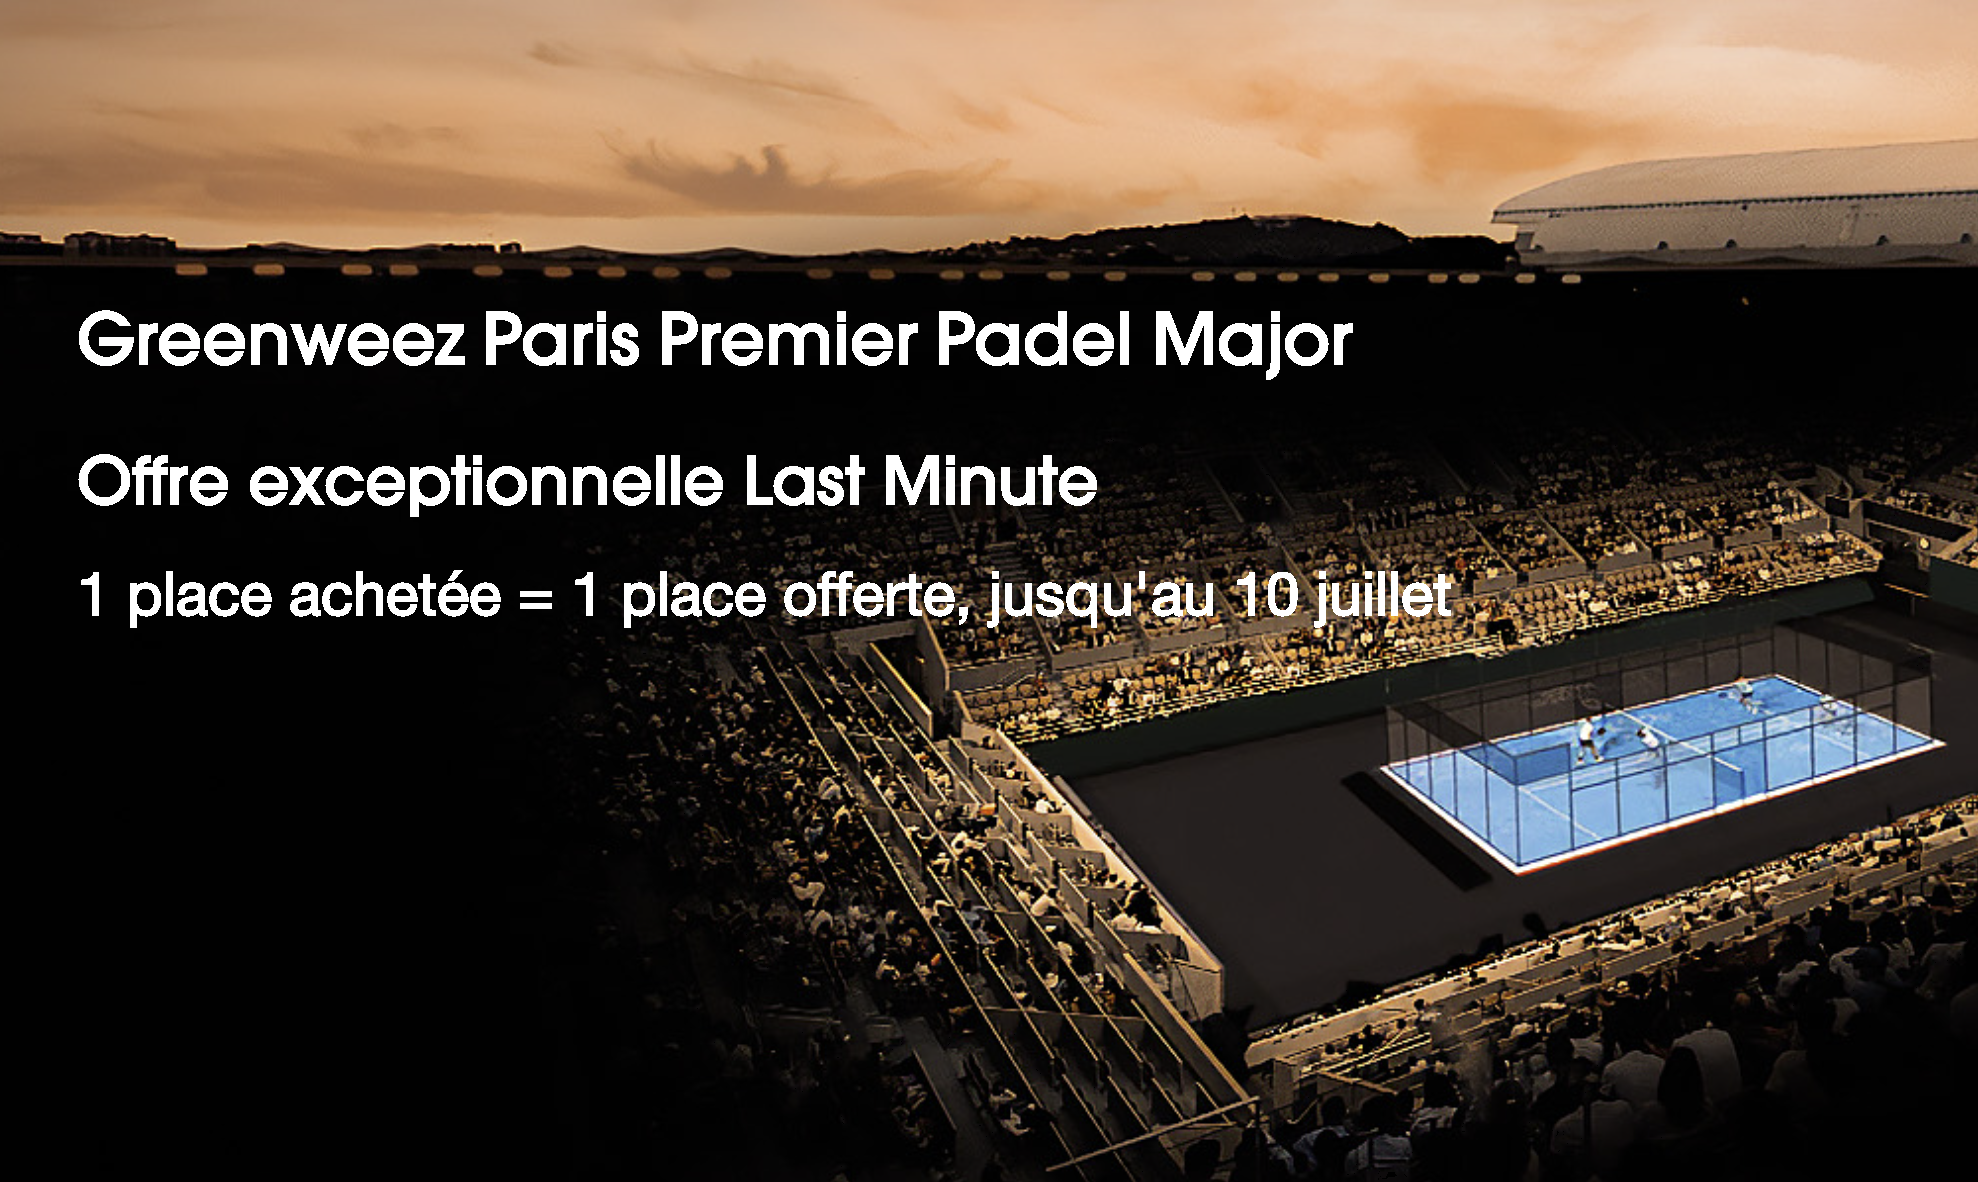 Greenweez Paris Premier Padel Major ：購入したXNUMX枚のチケットに対してXNUMX枚のチケットを提供